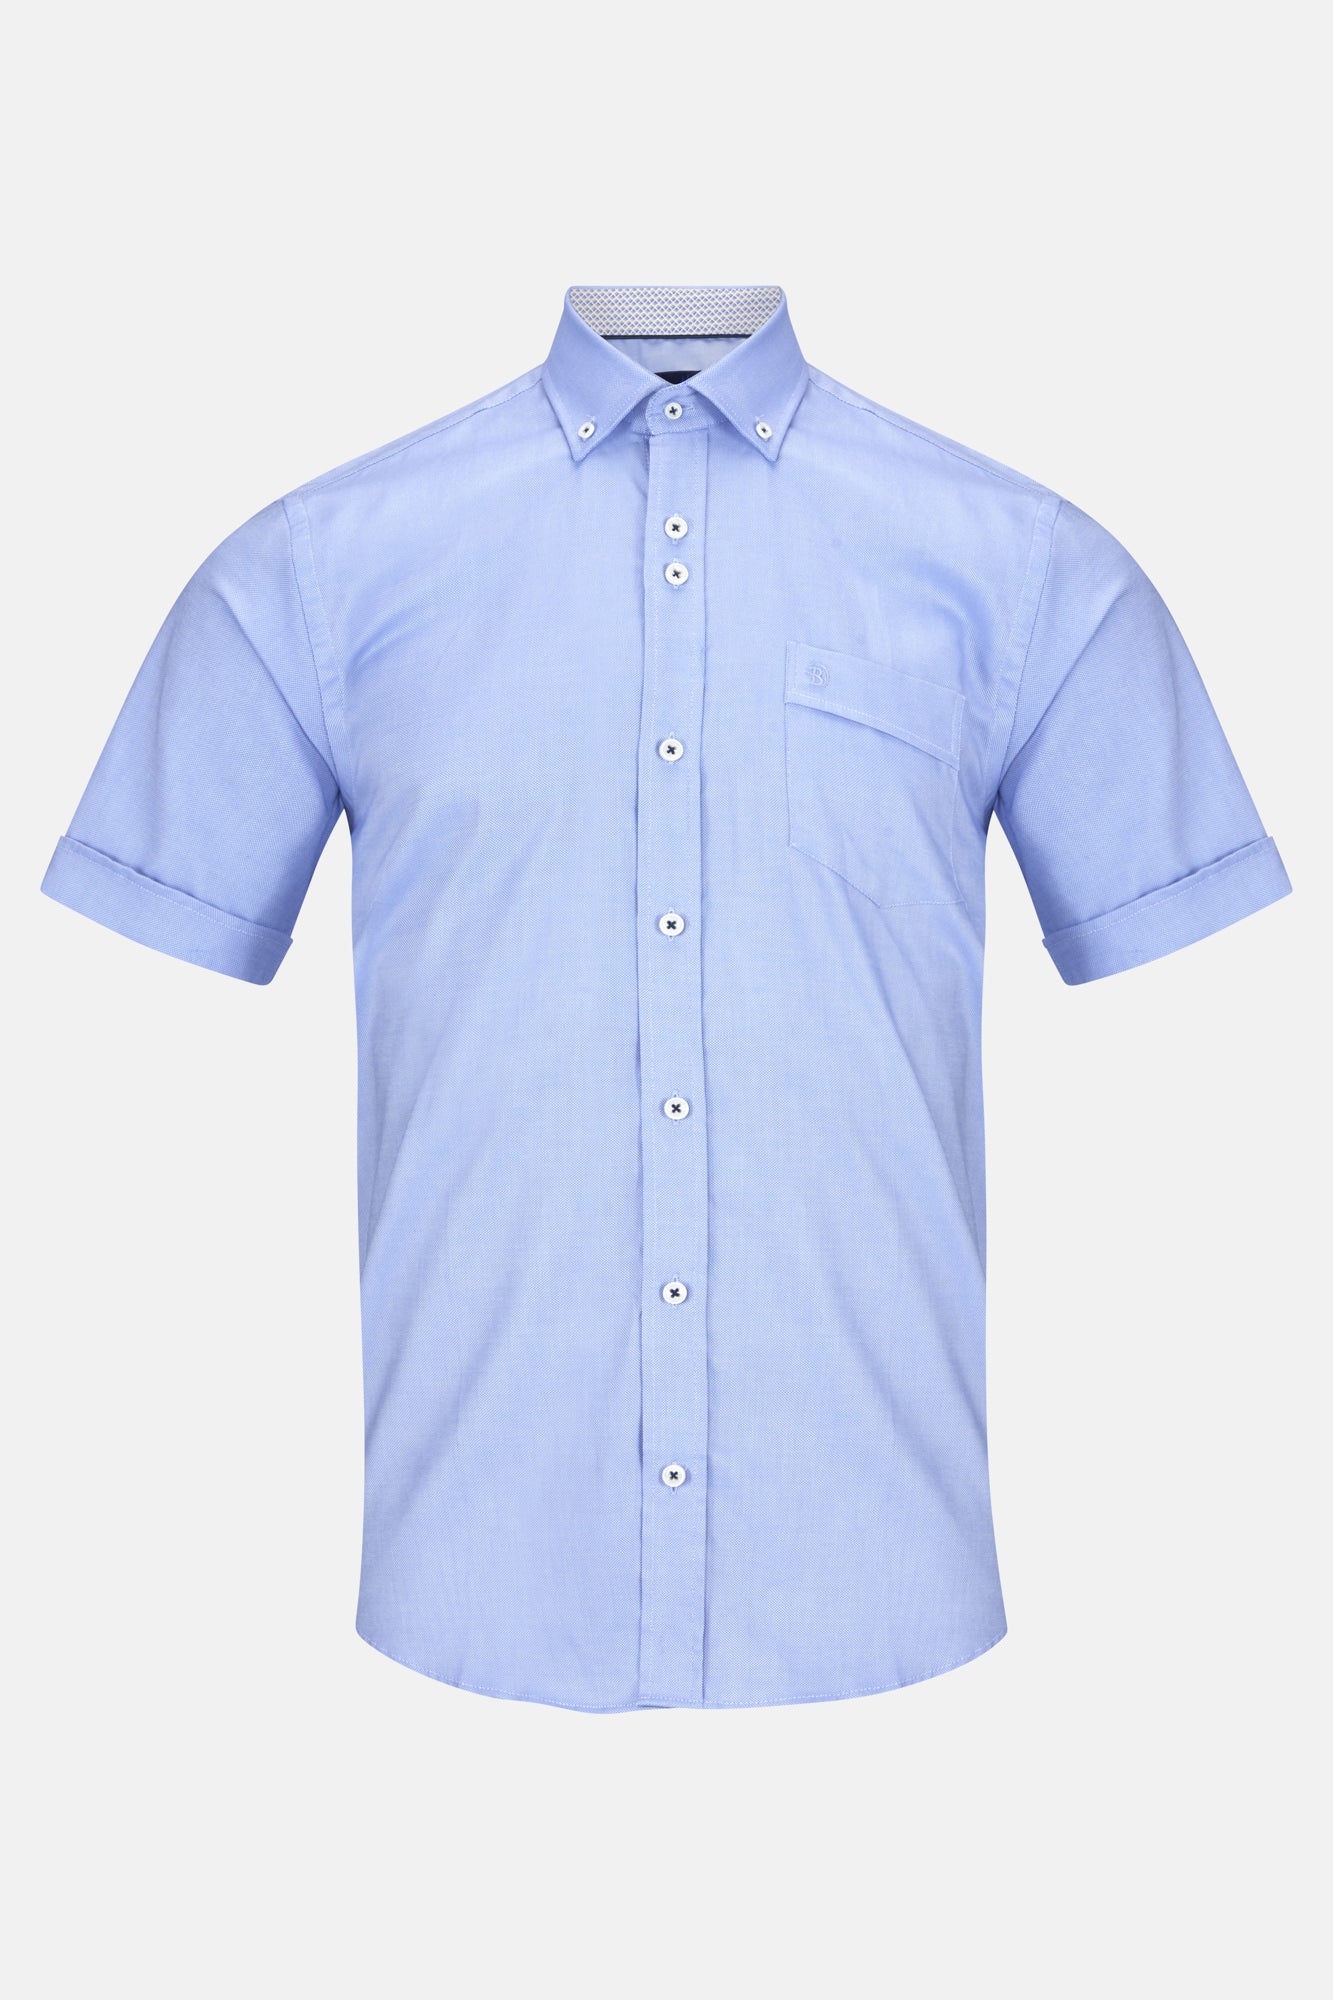 Noah Blue Short Sleeve Shirt By Benetti Menswear 